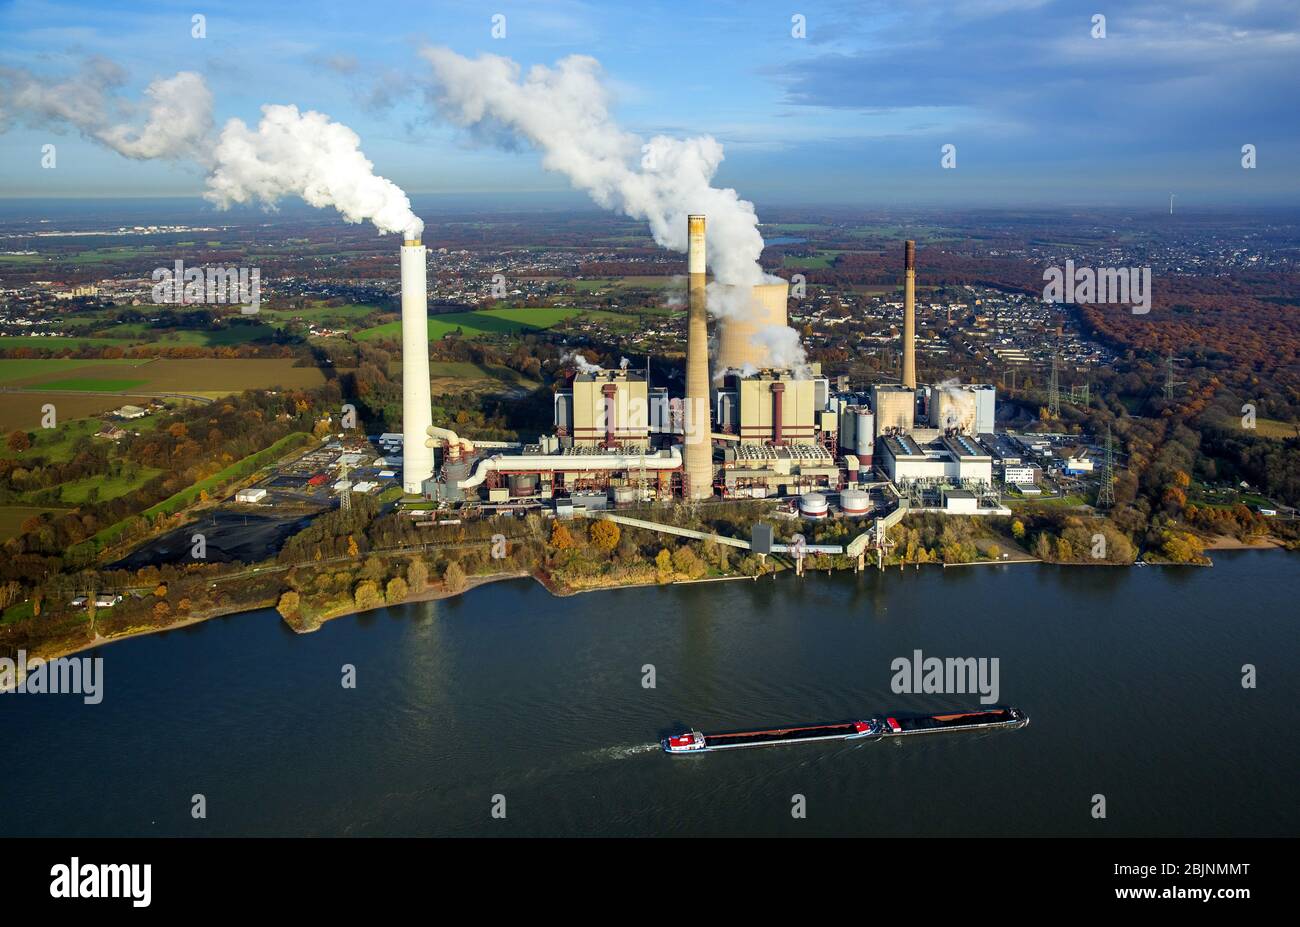 Power plant of Steag Energy Services GmbH in the district Moellen, 23.11.2016, aerial view, Germany, North Rhine-Westphalia, M├Âllen, Voerde (Niederrhein) Stock Photo